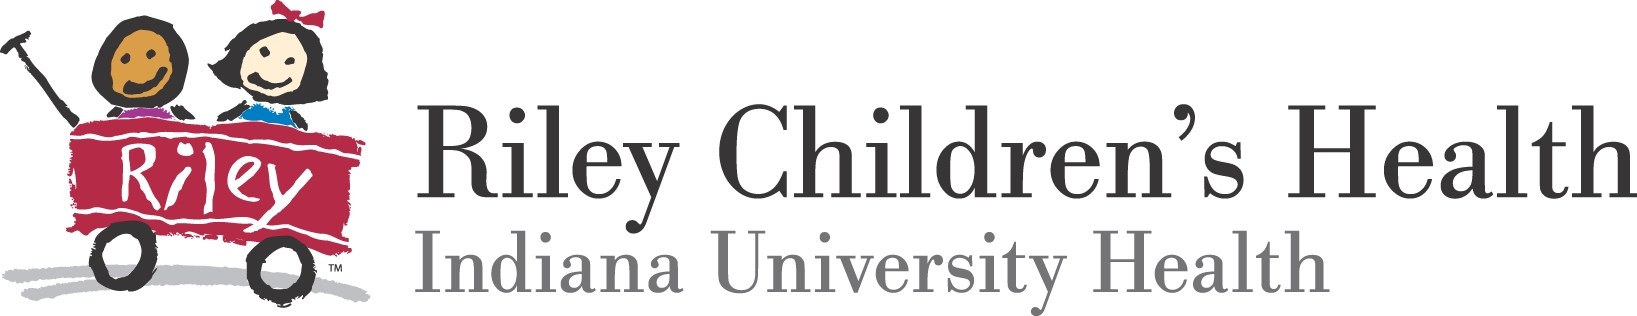 Riley Children’s Health Safe Sleep Campaign - Logo - https://s41078.pcdn.co/wp-content/uploads/2018/11/RileyChildrensHealthHz4c.jpg